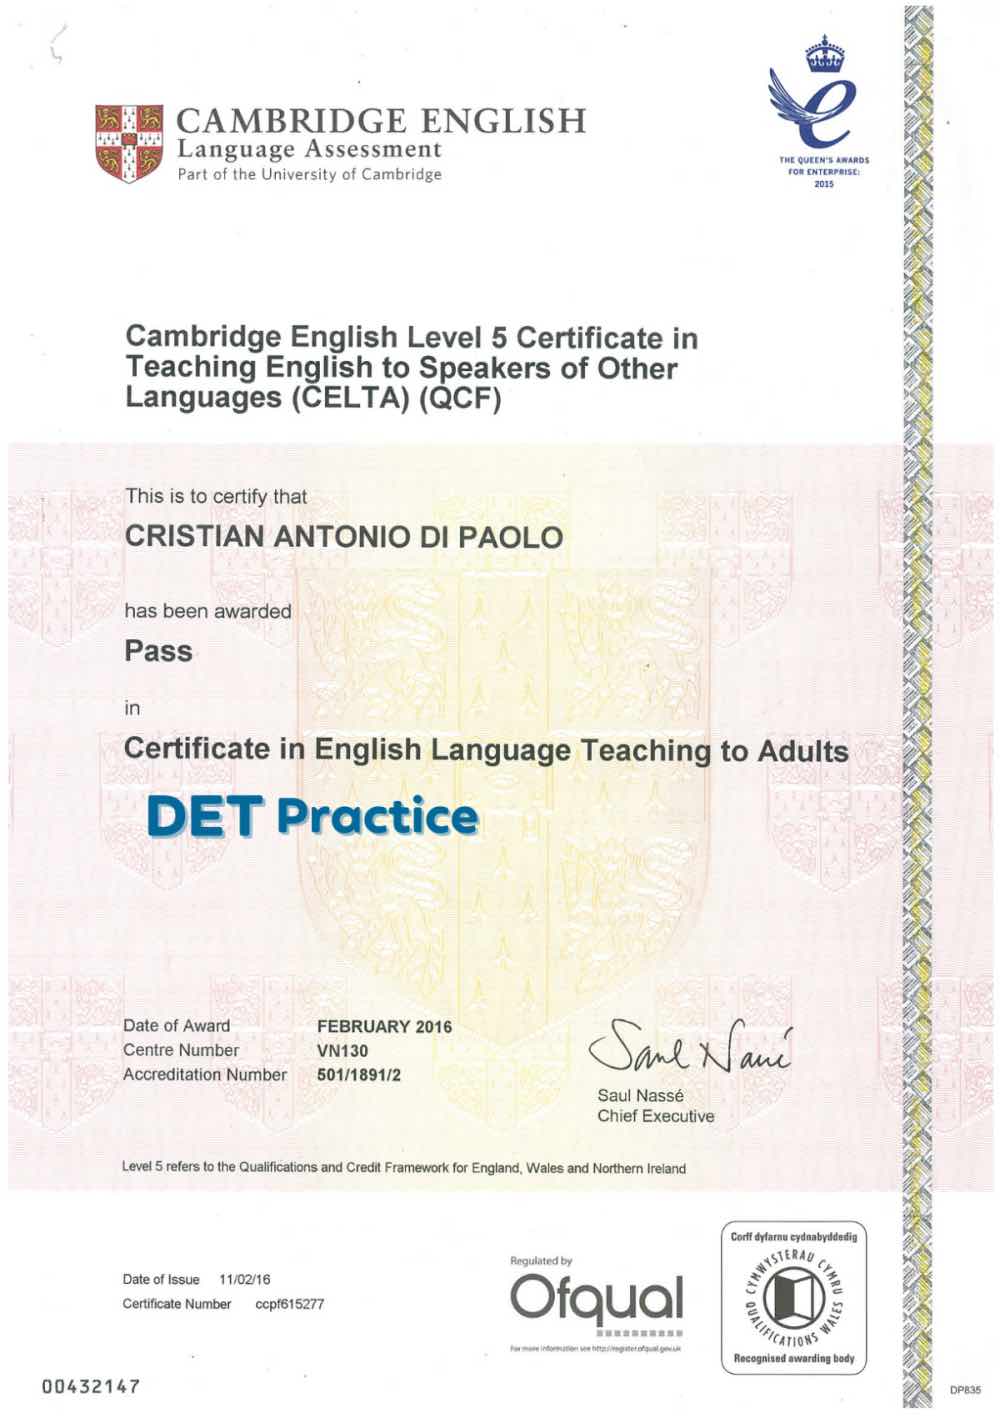 CELTA Level 5, duolingo English test, DET Ready, DET Practice Platform, DET preparation